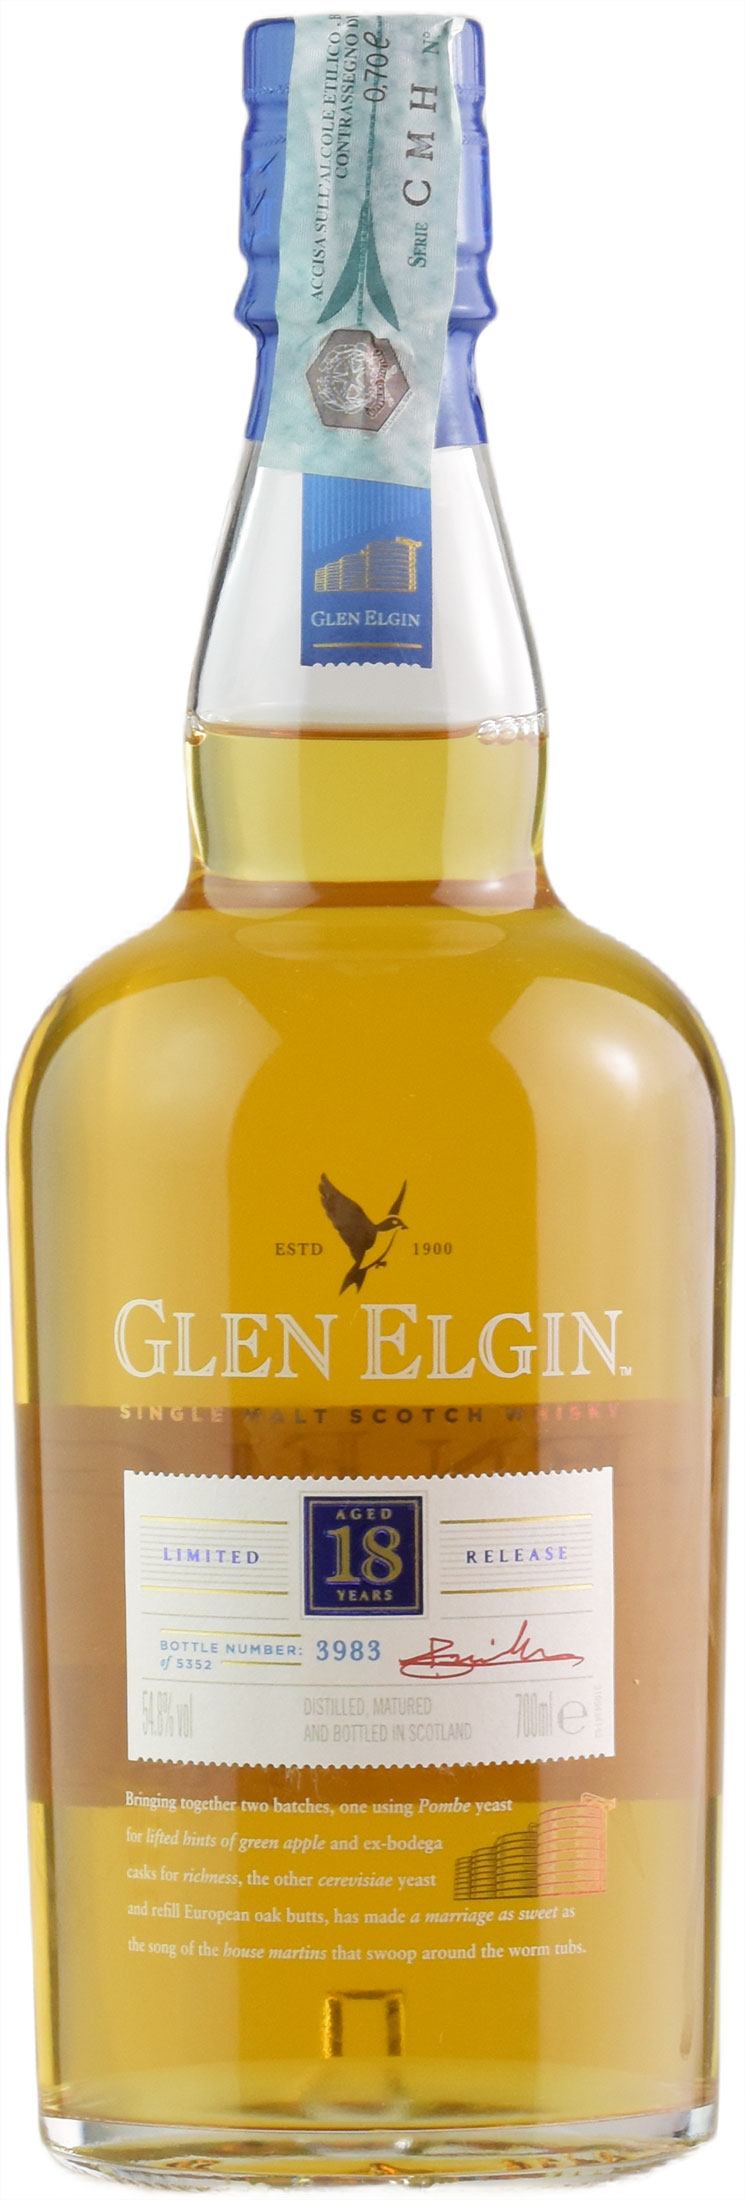 Glen Elgin Single Malt Scotch Whisky Limited Release 18 Anni